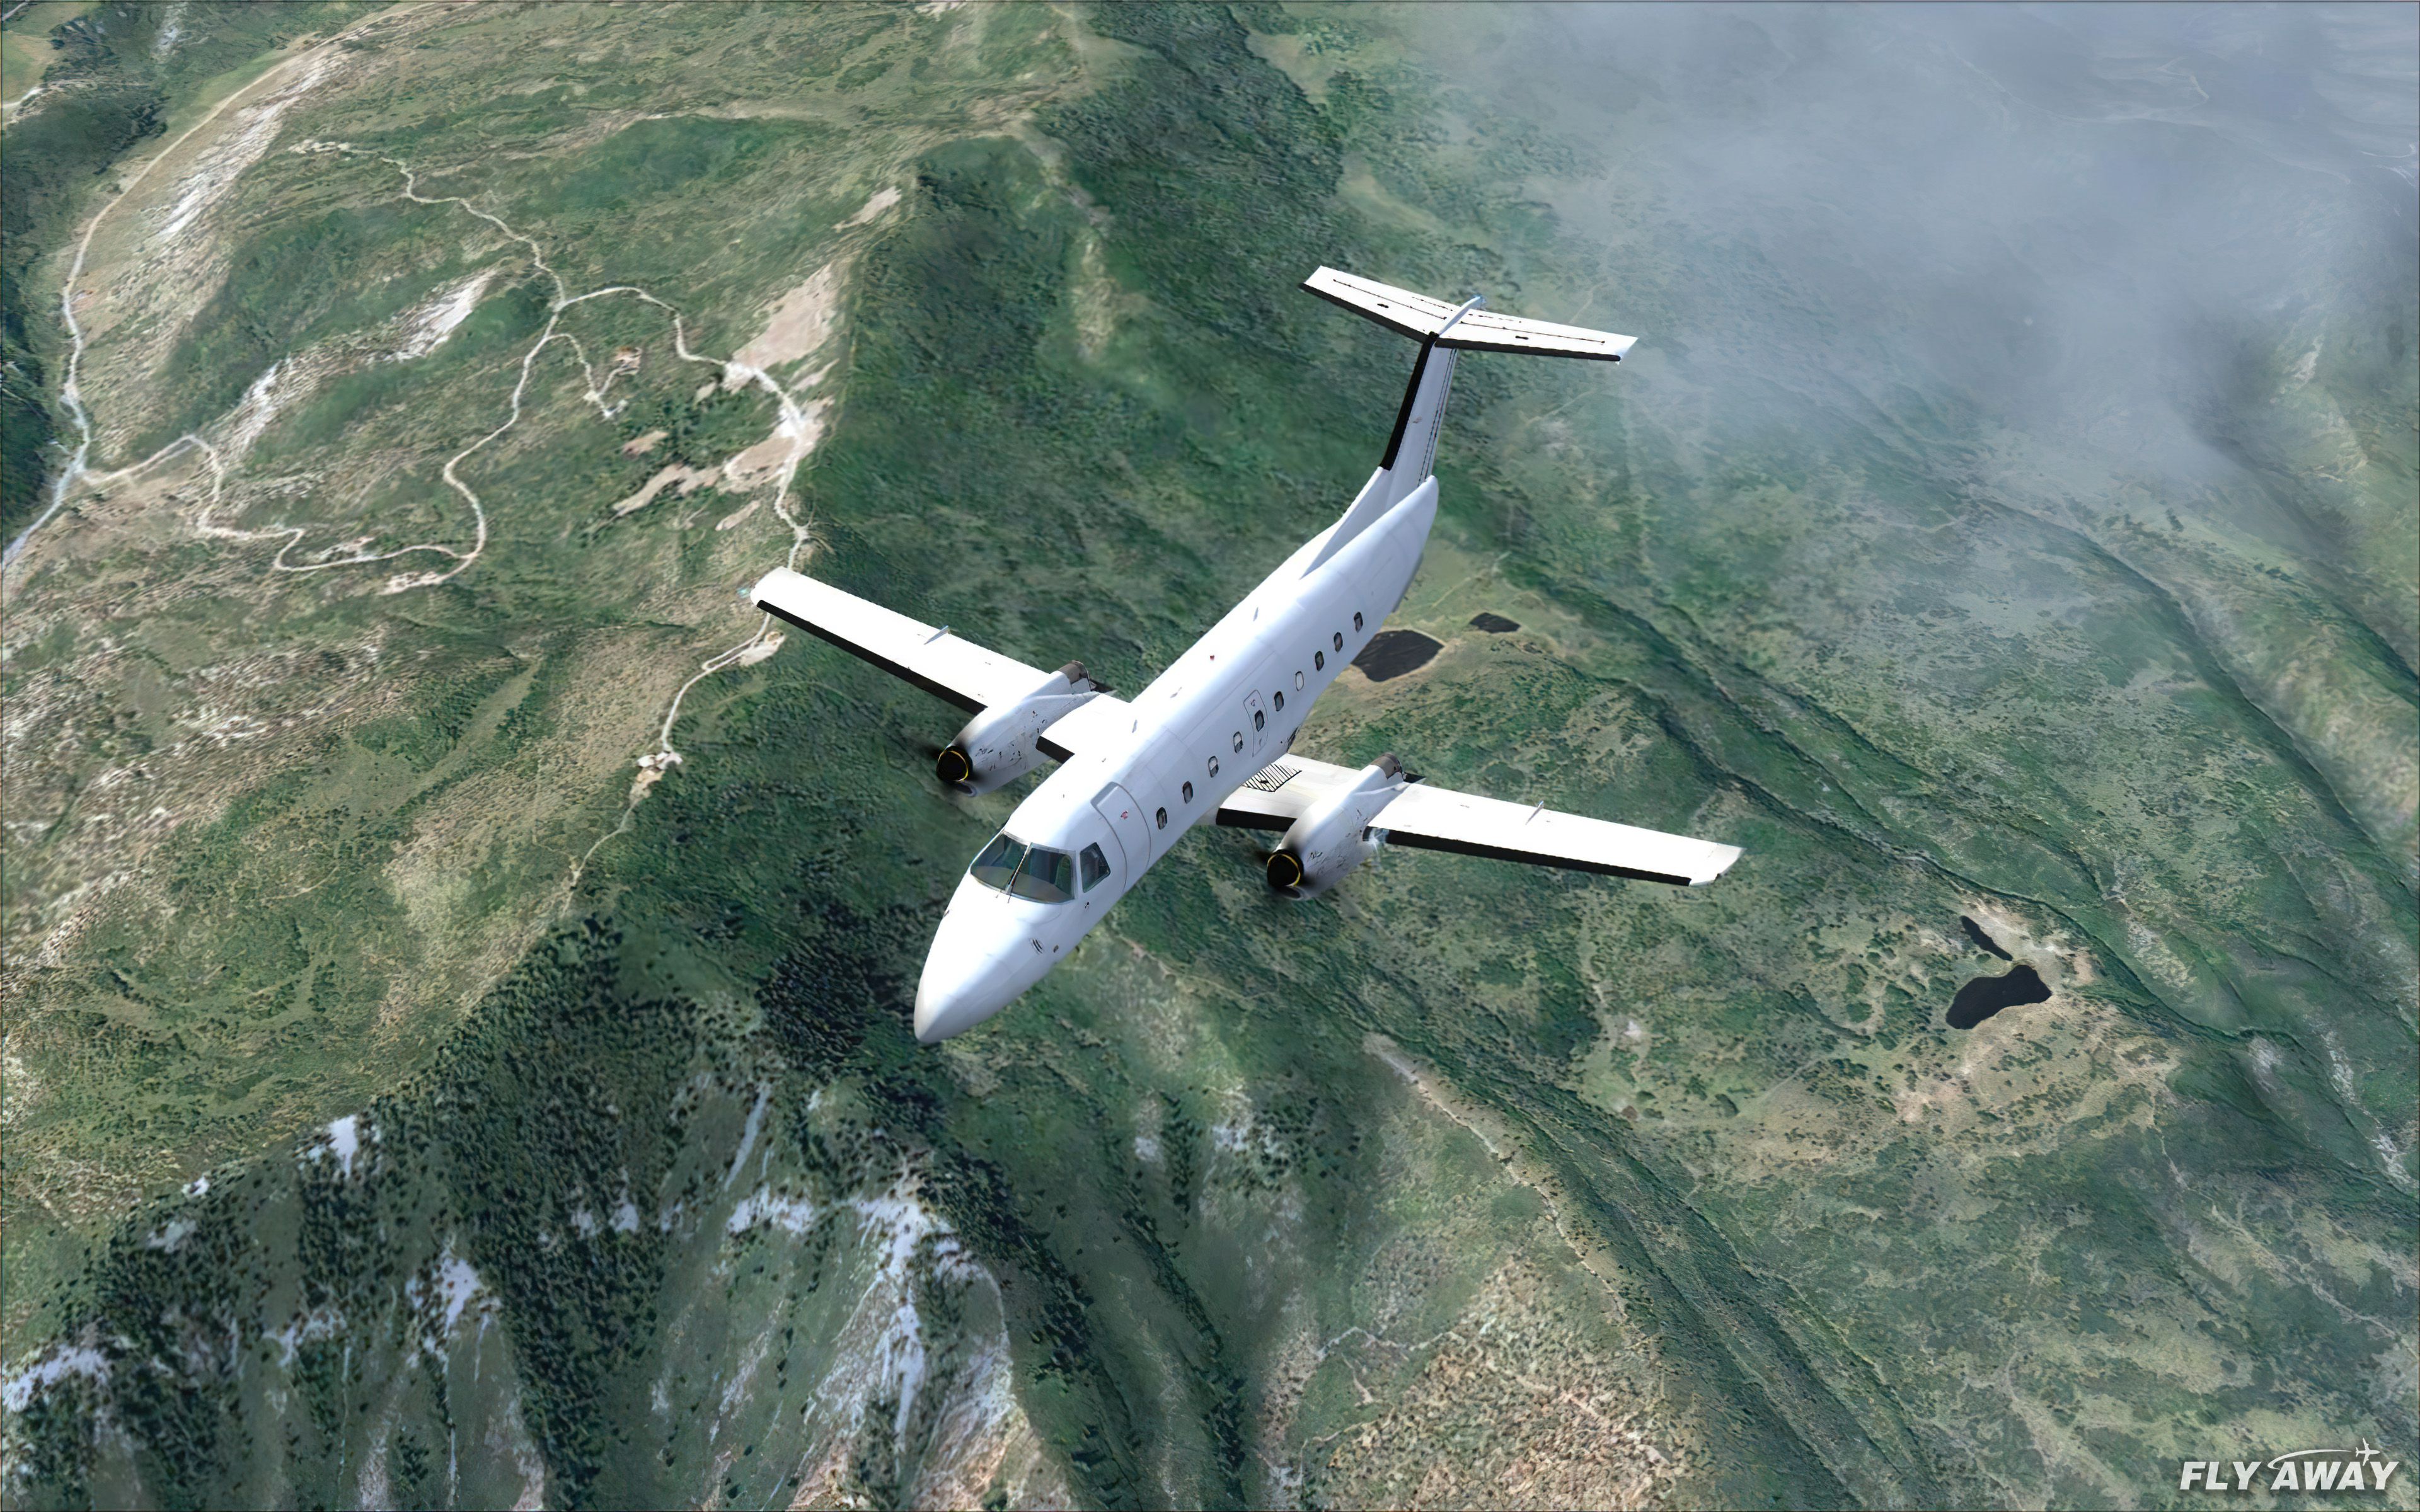 Microsoft Flight Simulator X to release December 18